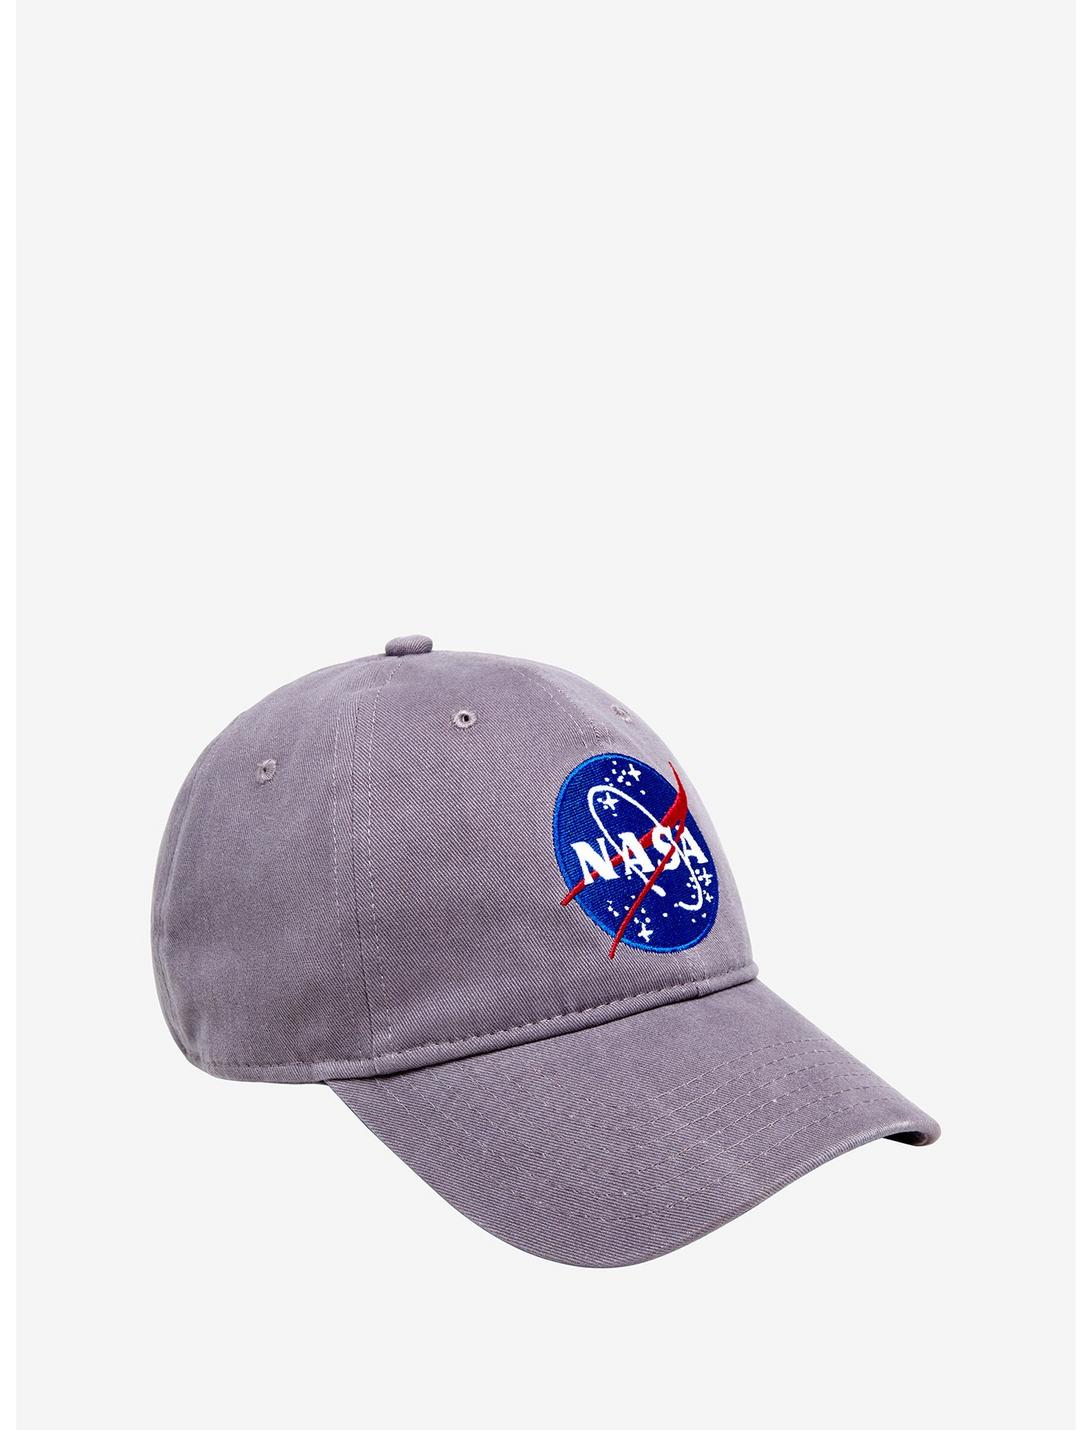 NASA Washed Dad Cap, , hi-res